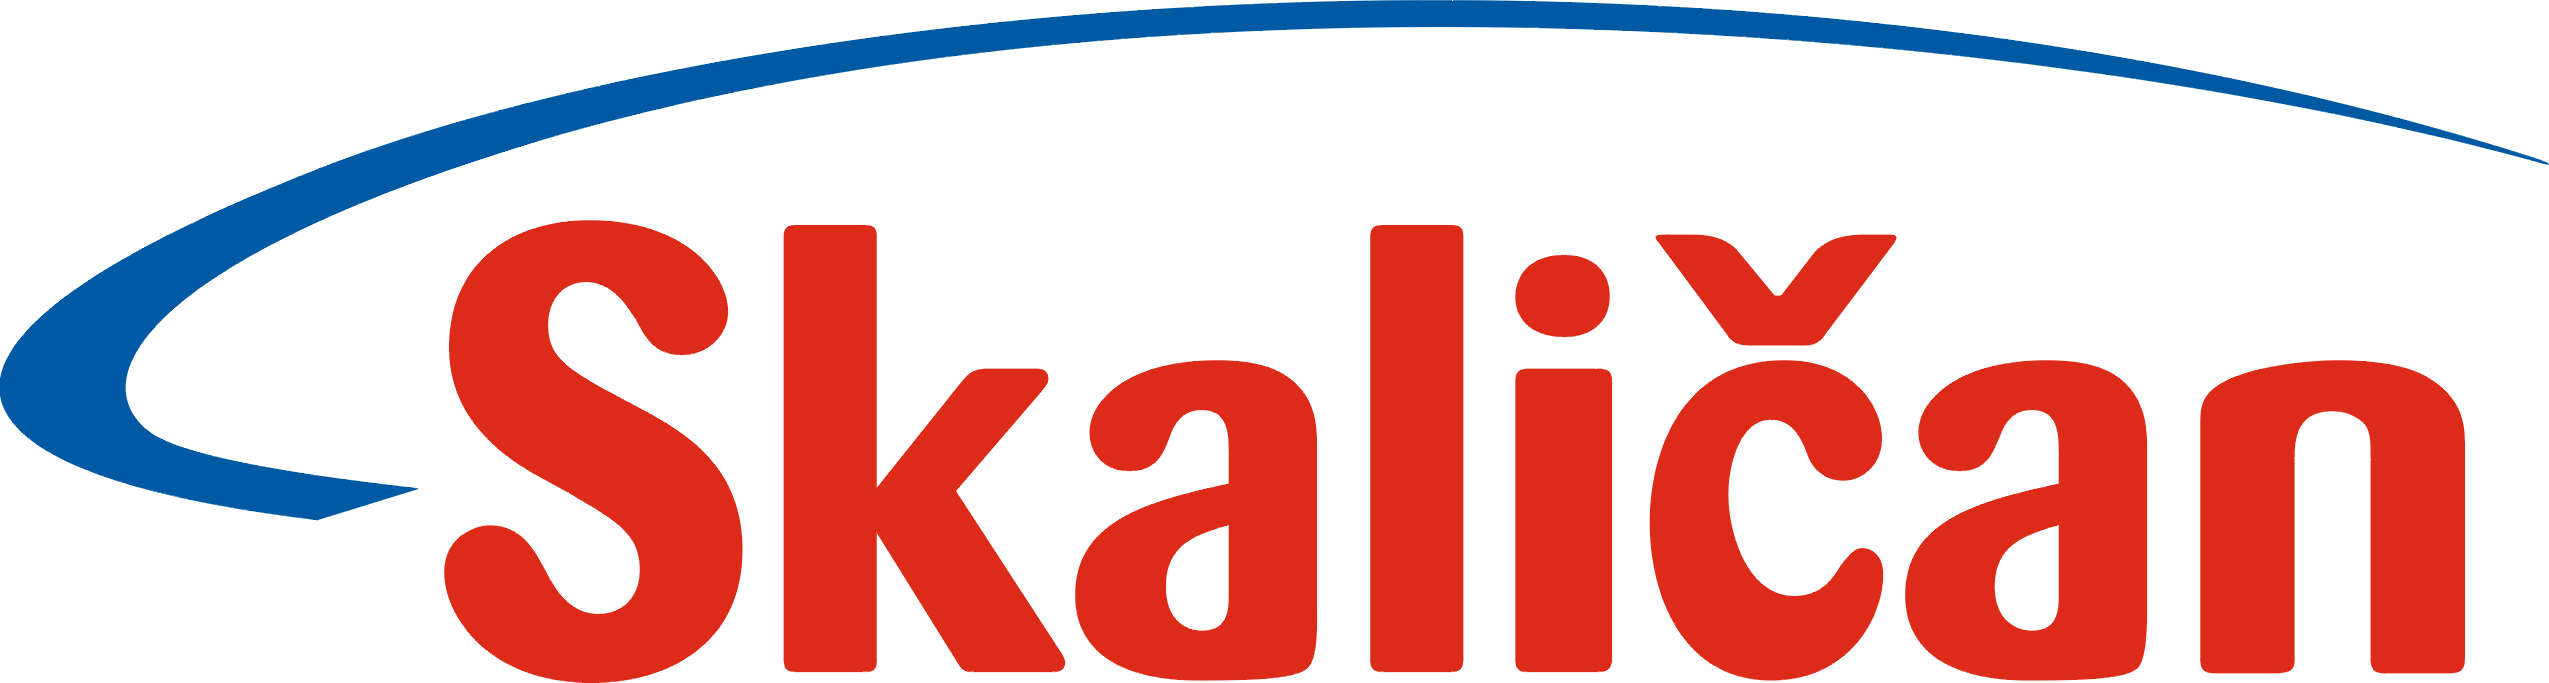 SKALICAN_logo3v